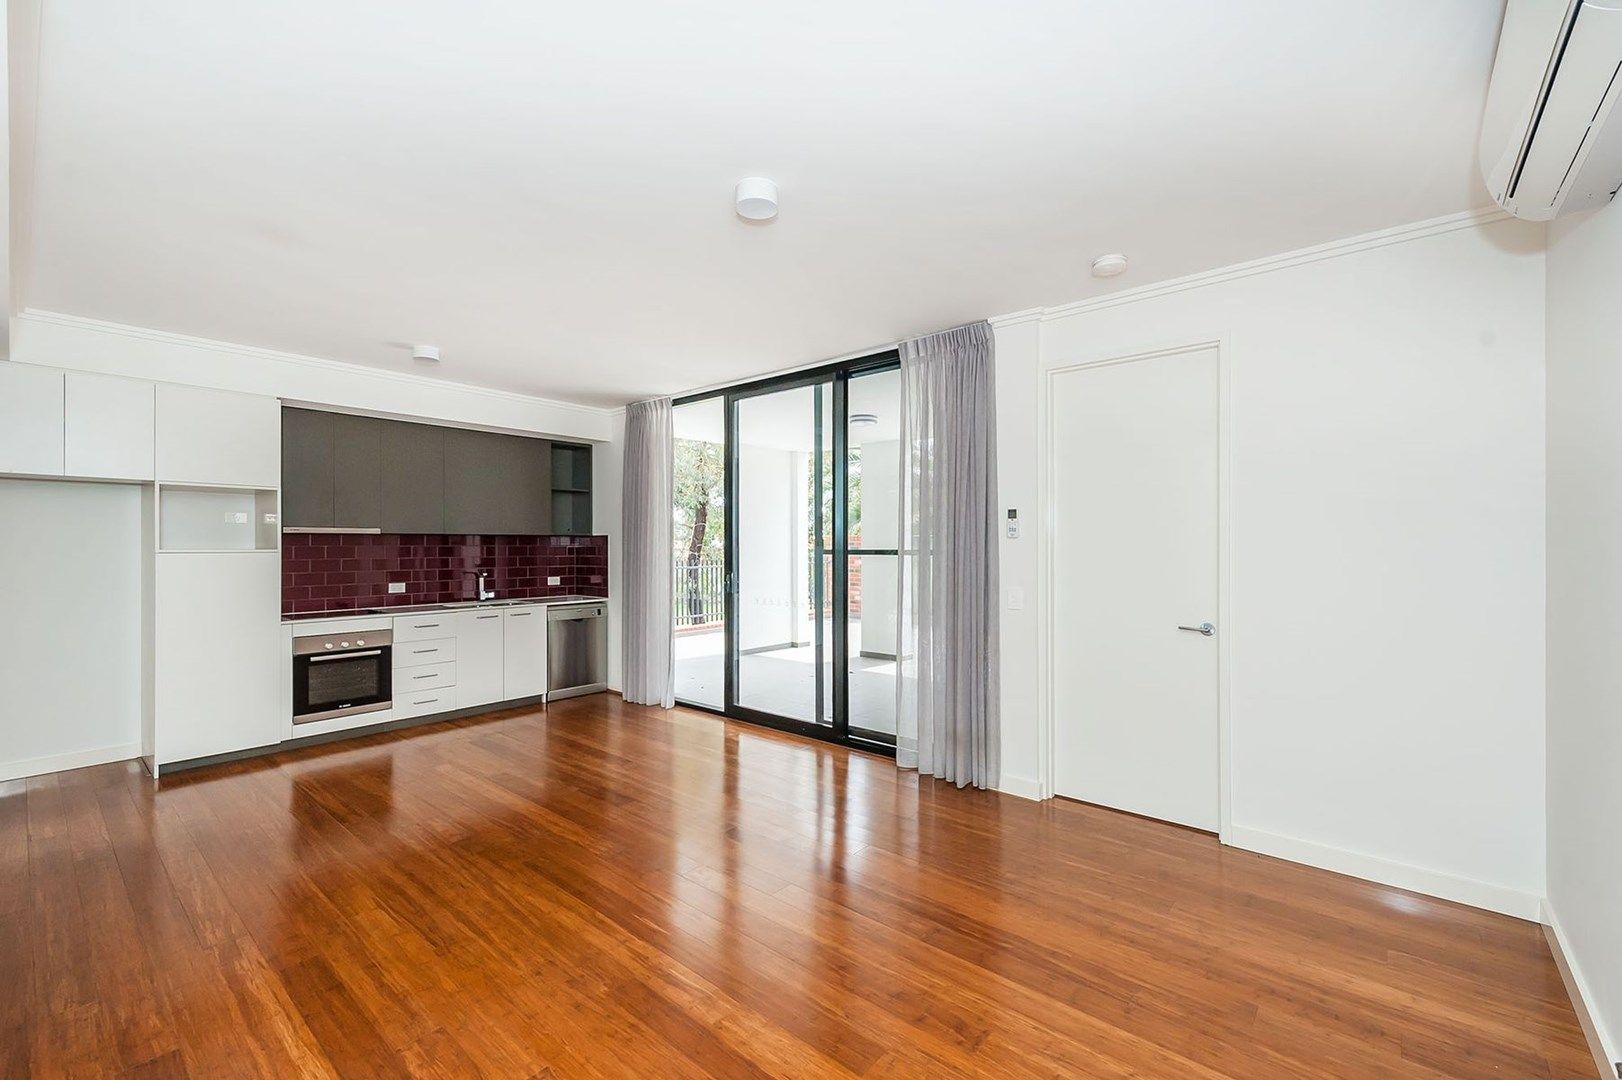 3 bedrooms Apartment / Unit / Flat in 19/99 Palmerston Street PERTH WA, 6000